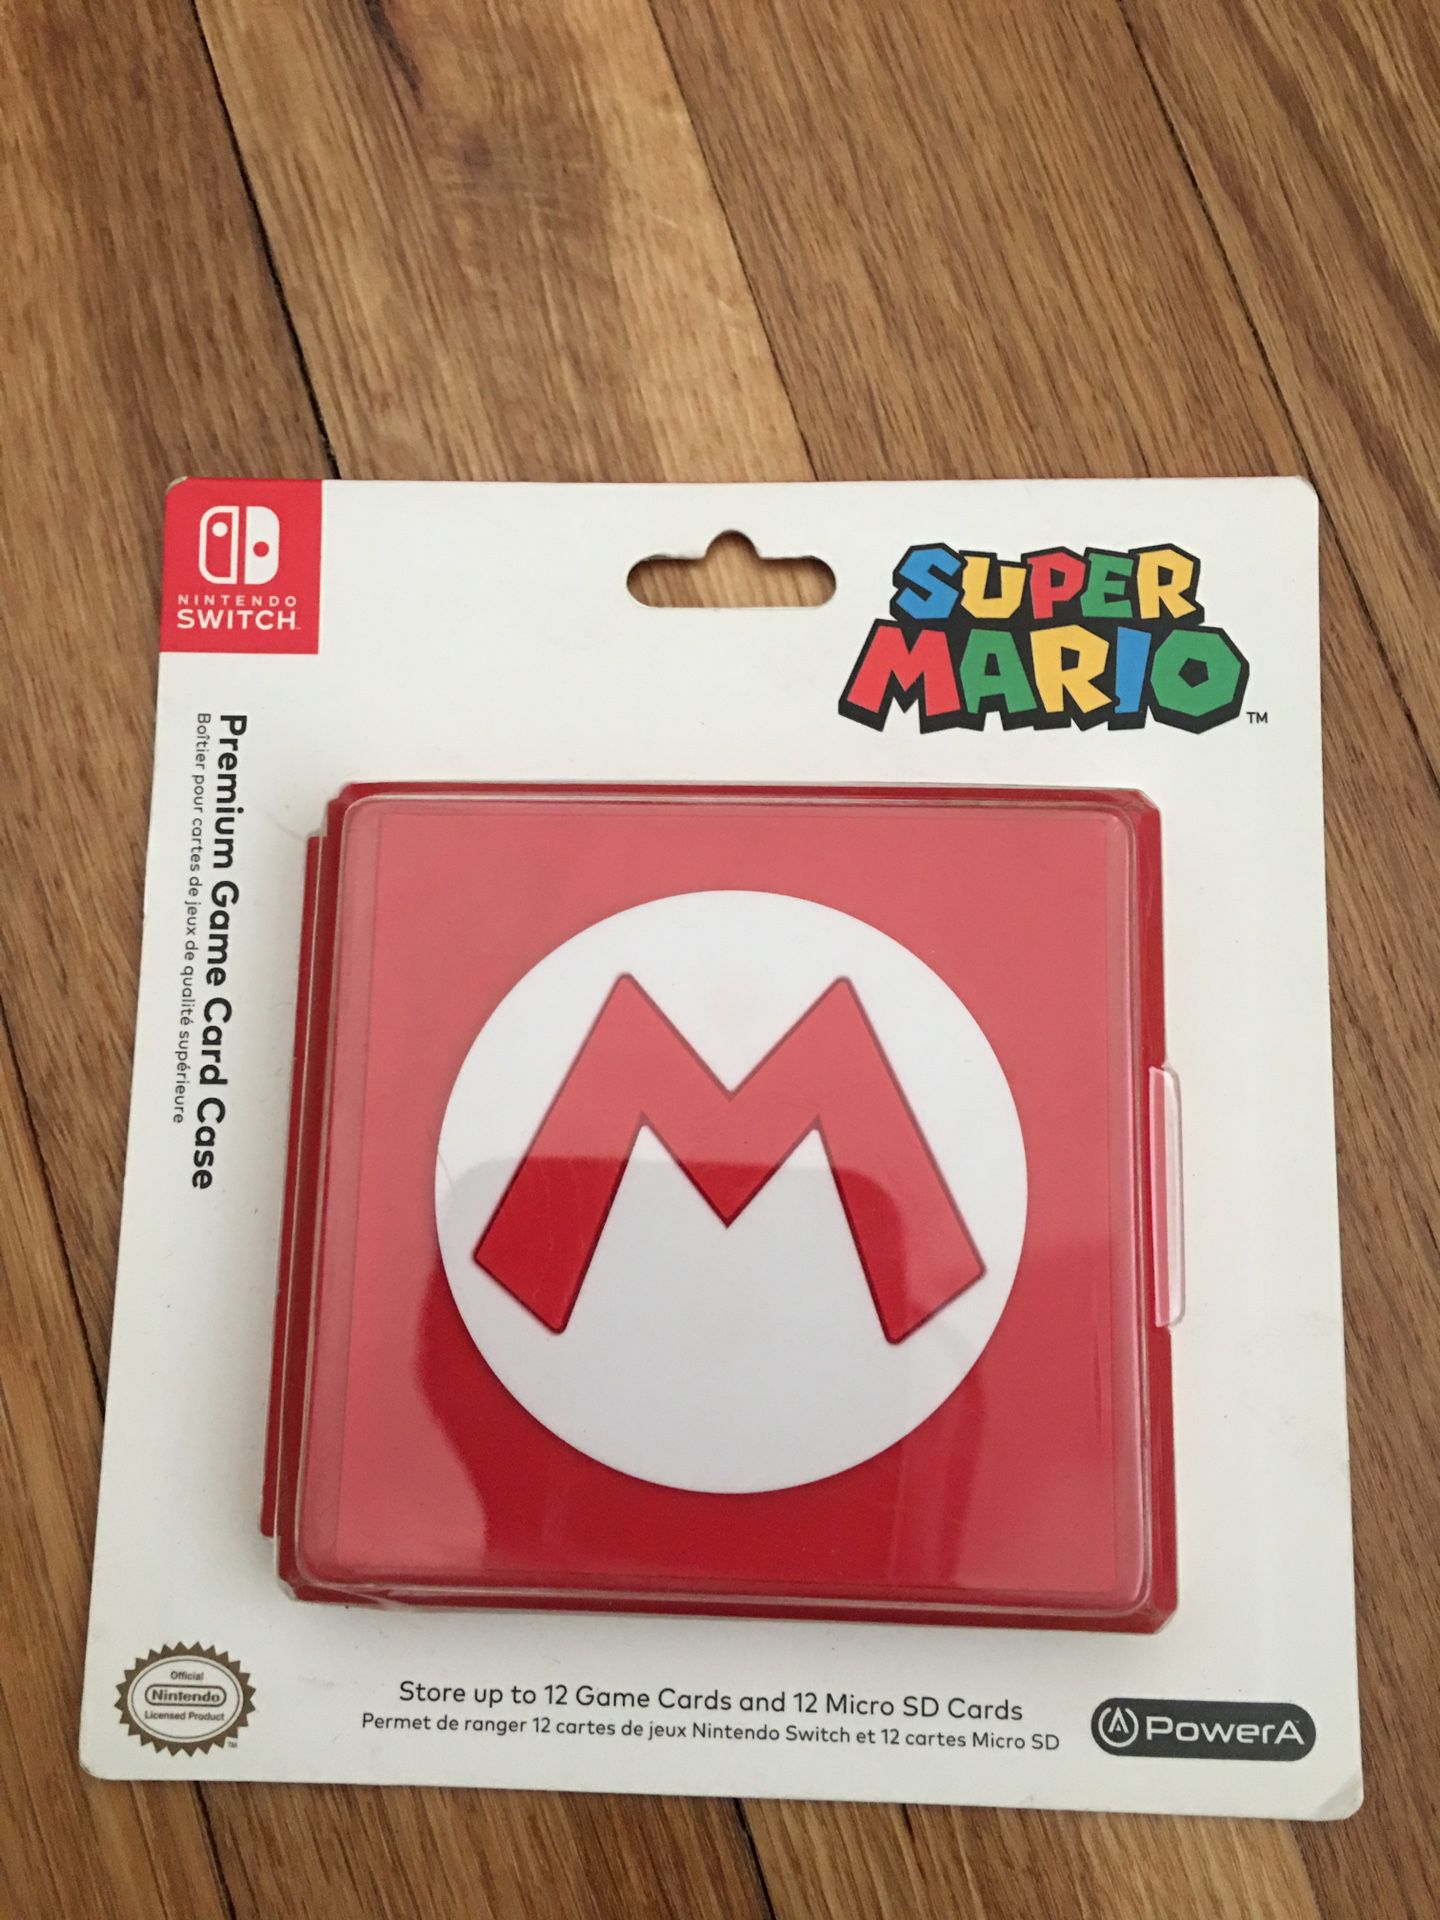 Combo Nintendo Switch 12 Game Premium Case + Super Mario Odyssey Gold coin!